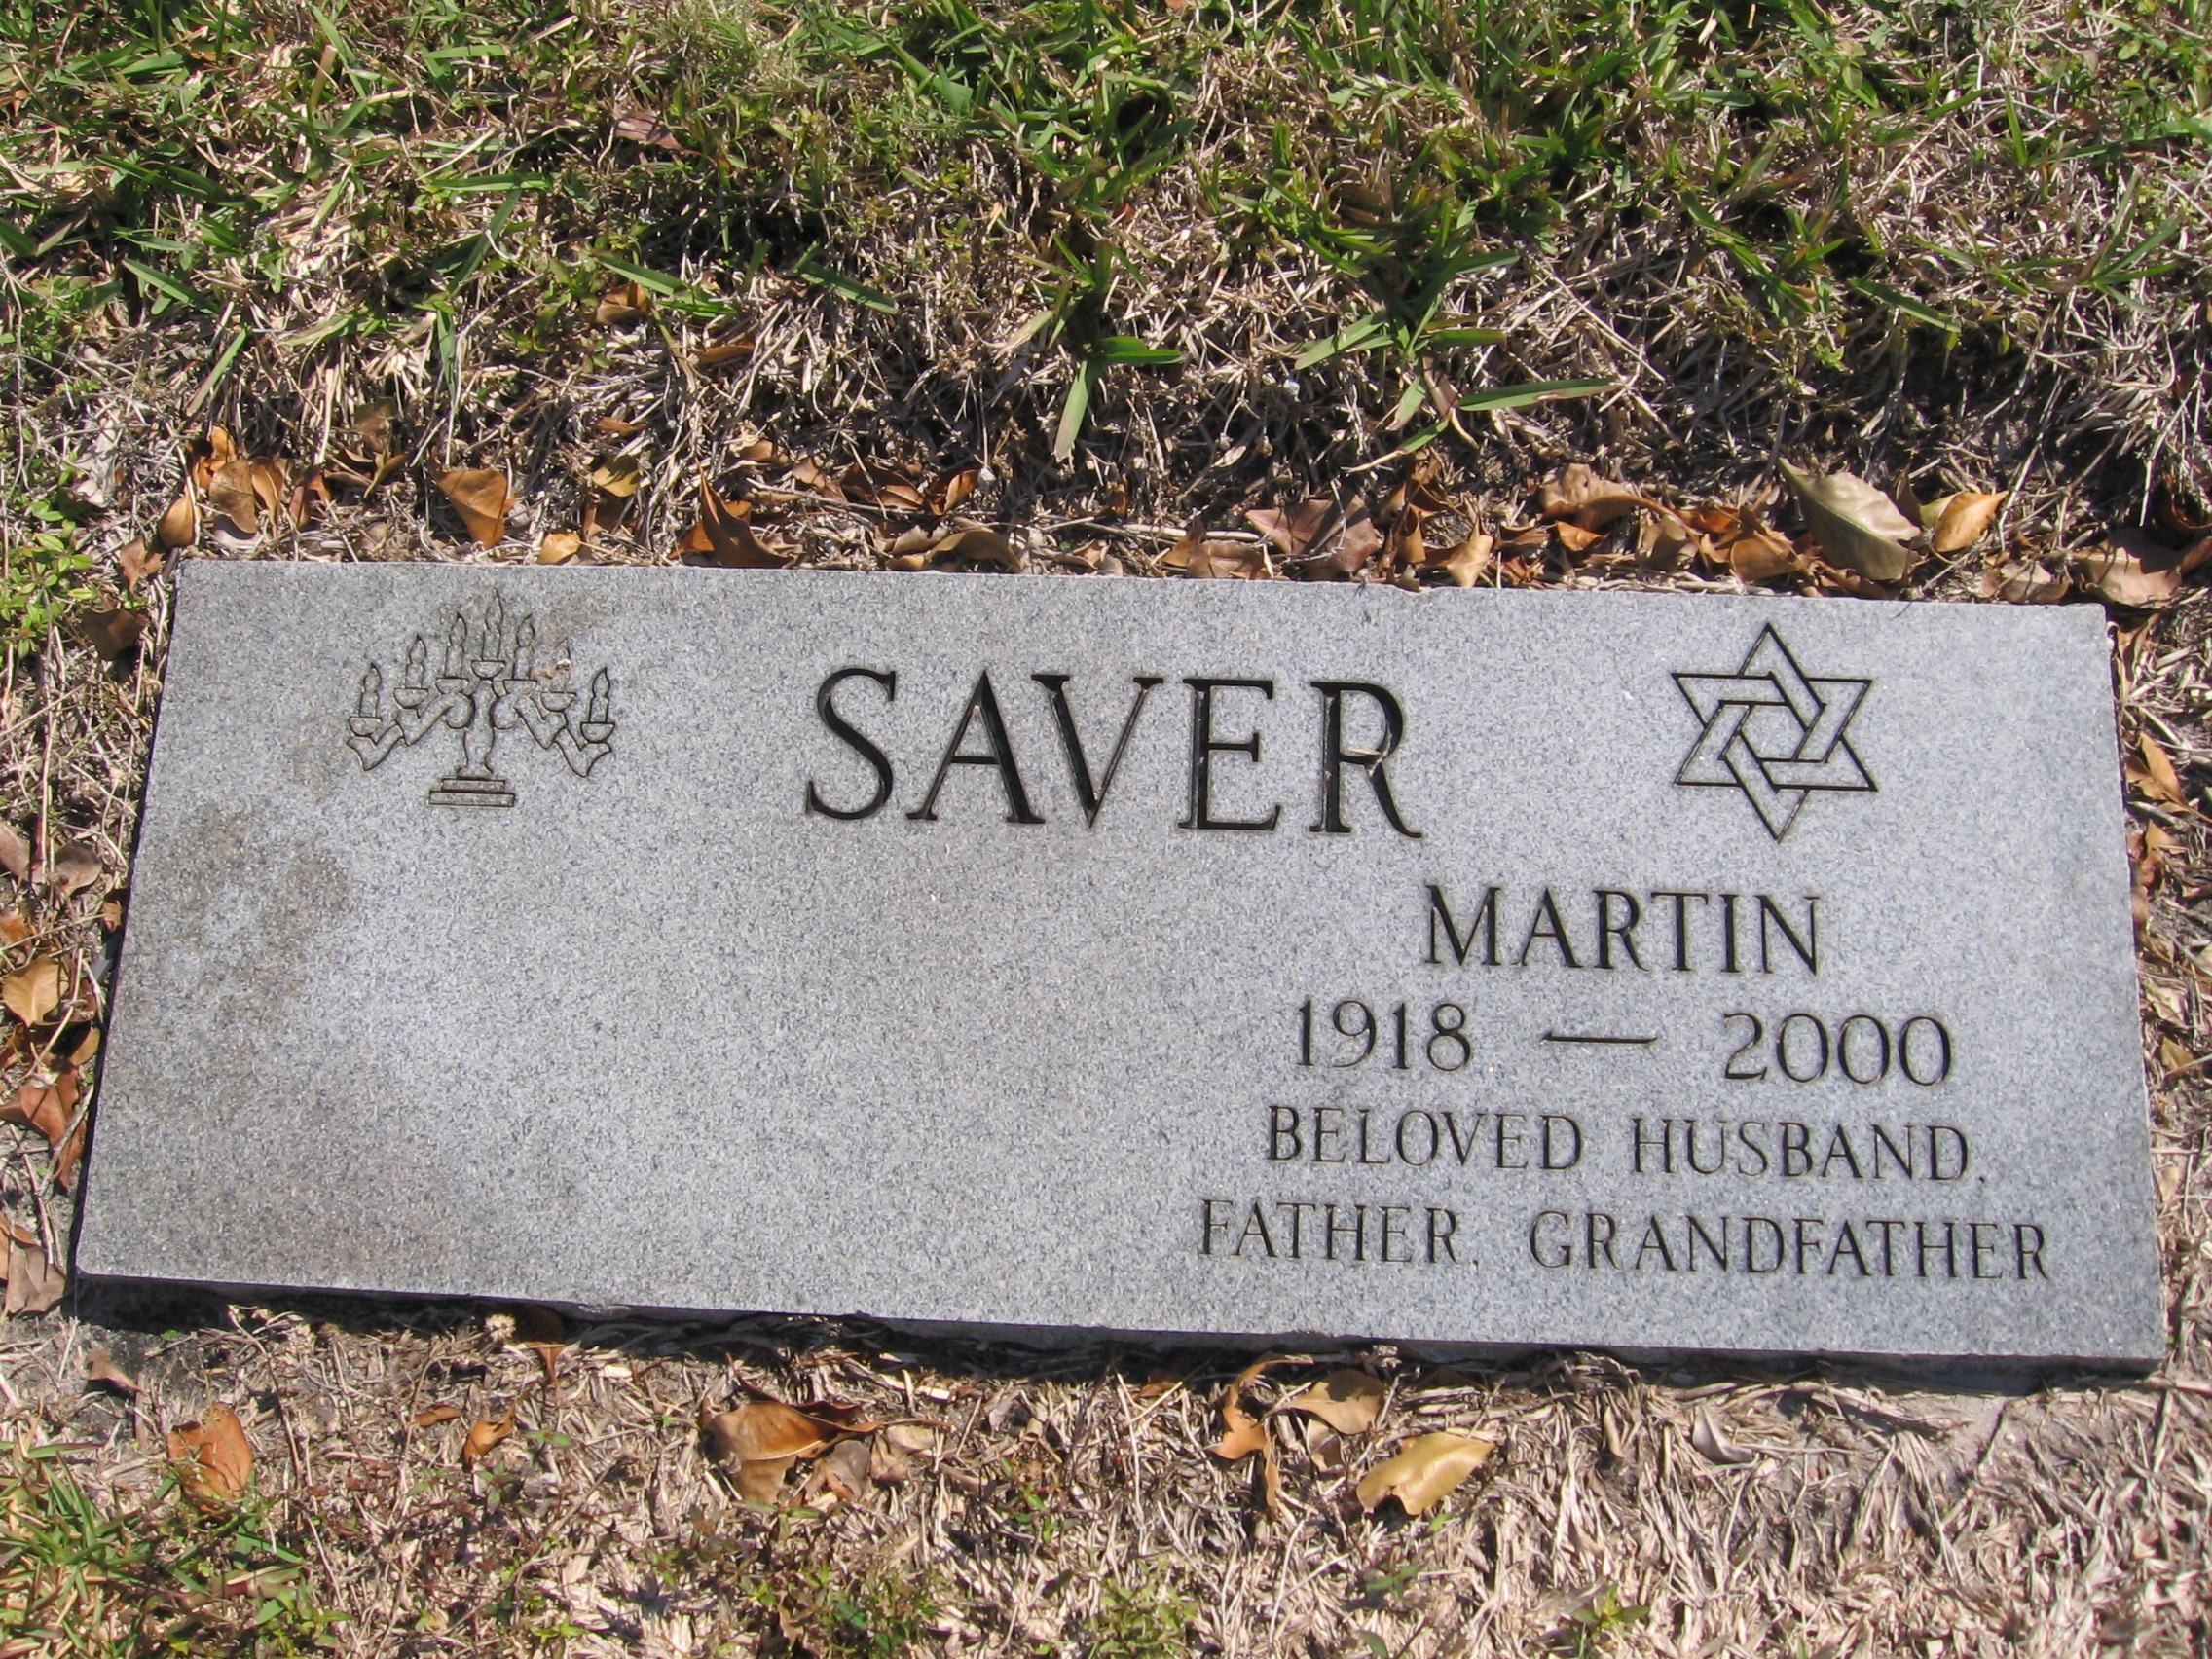 Martin Saver